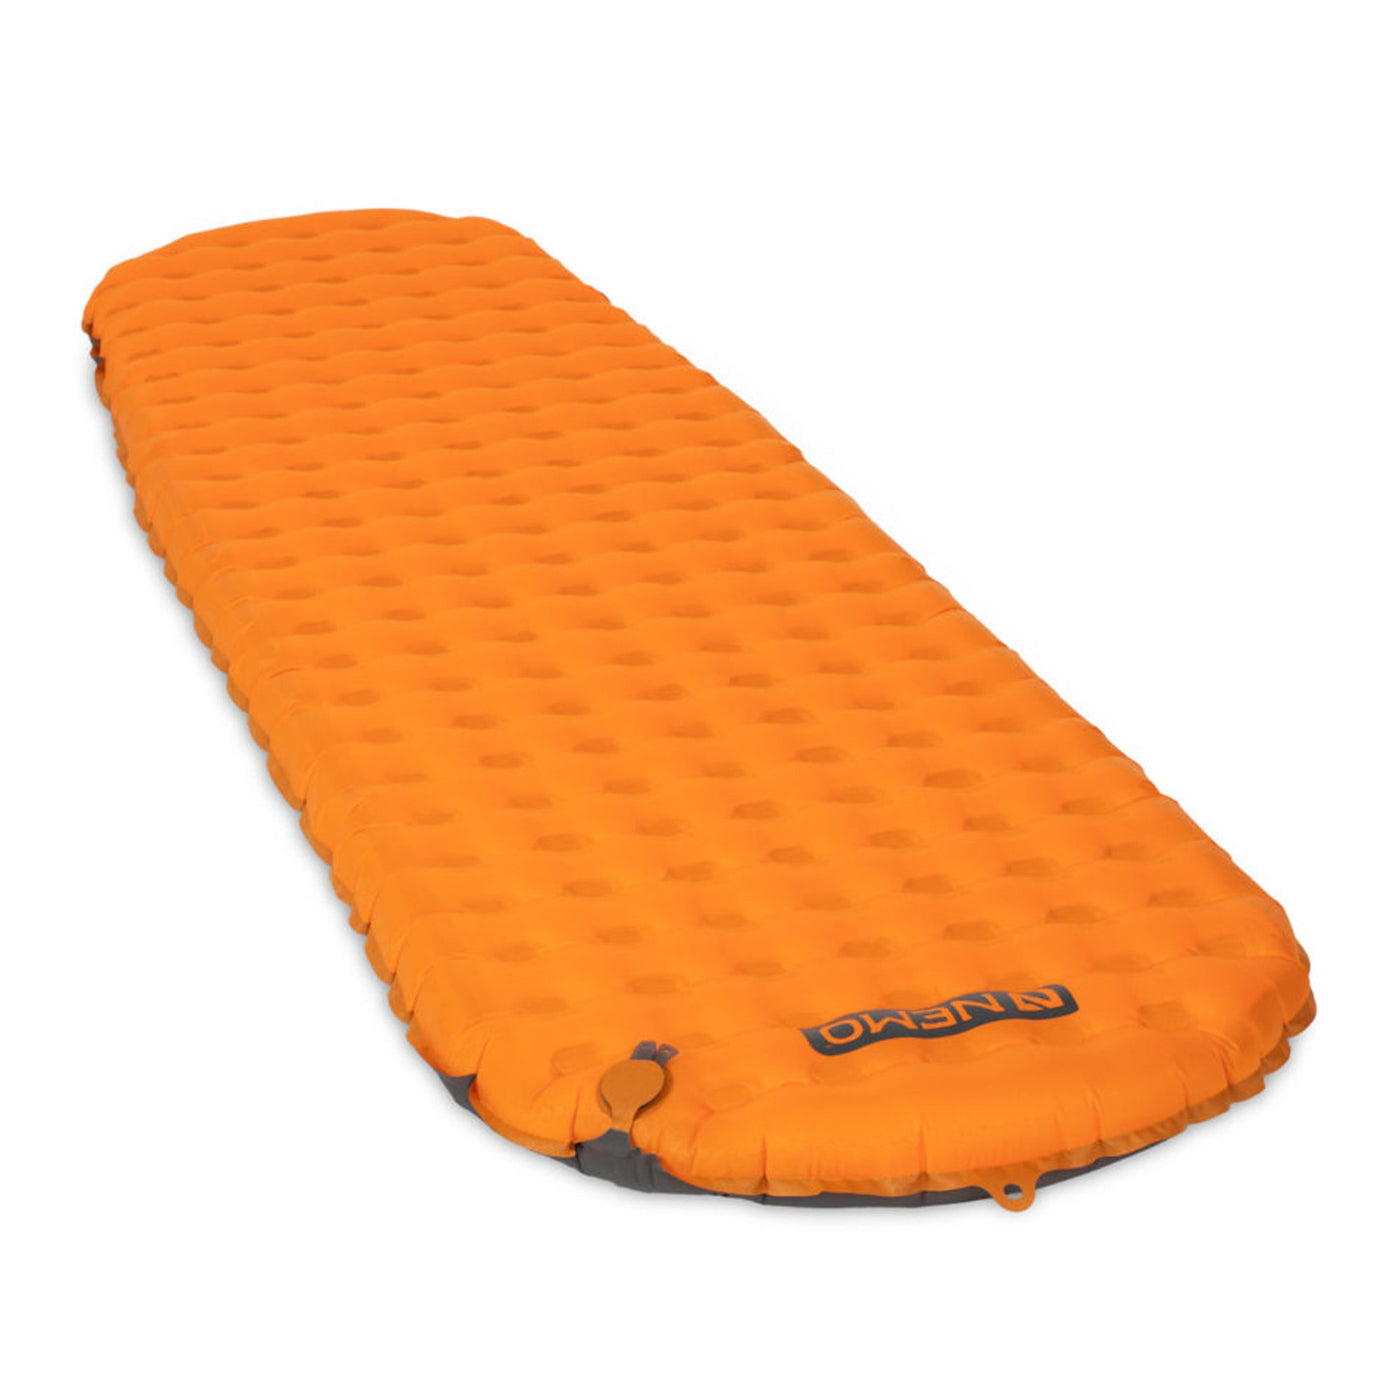 Nemo Tensor 2023 Alpine Insulated Sleeping Mat